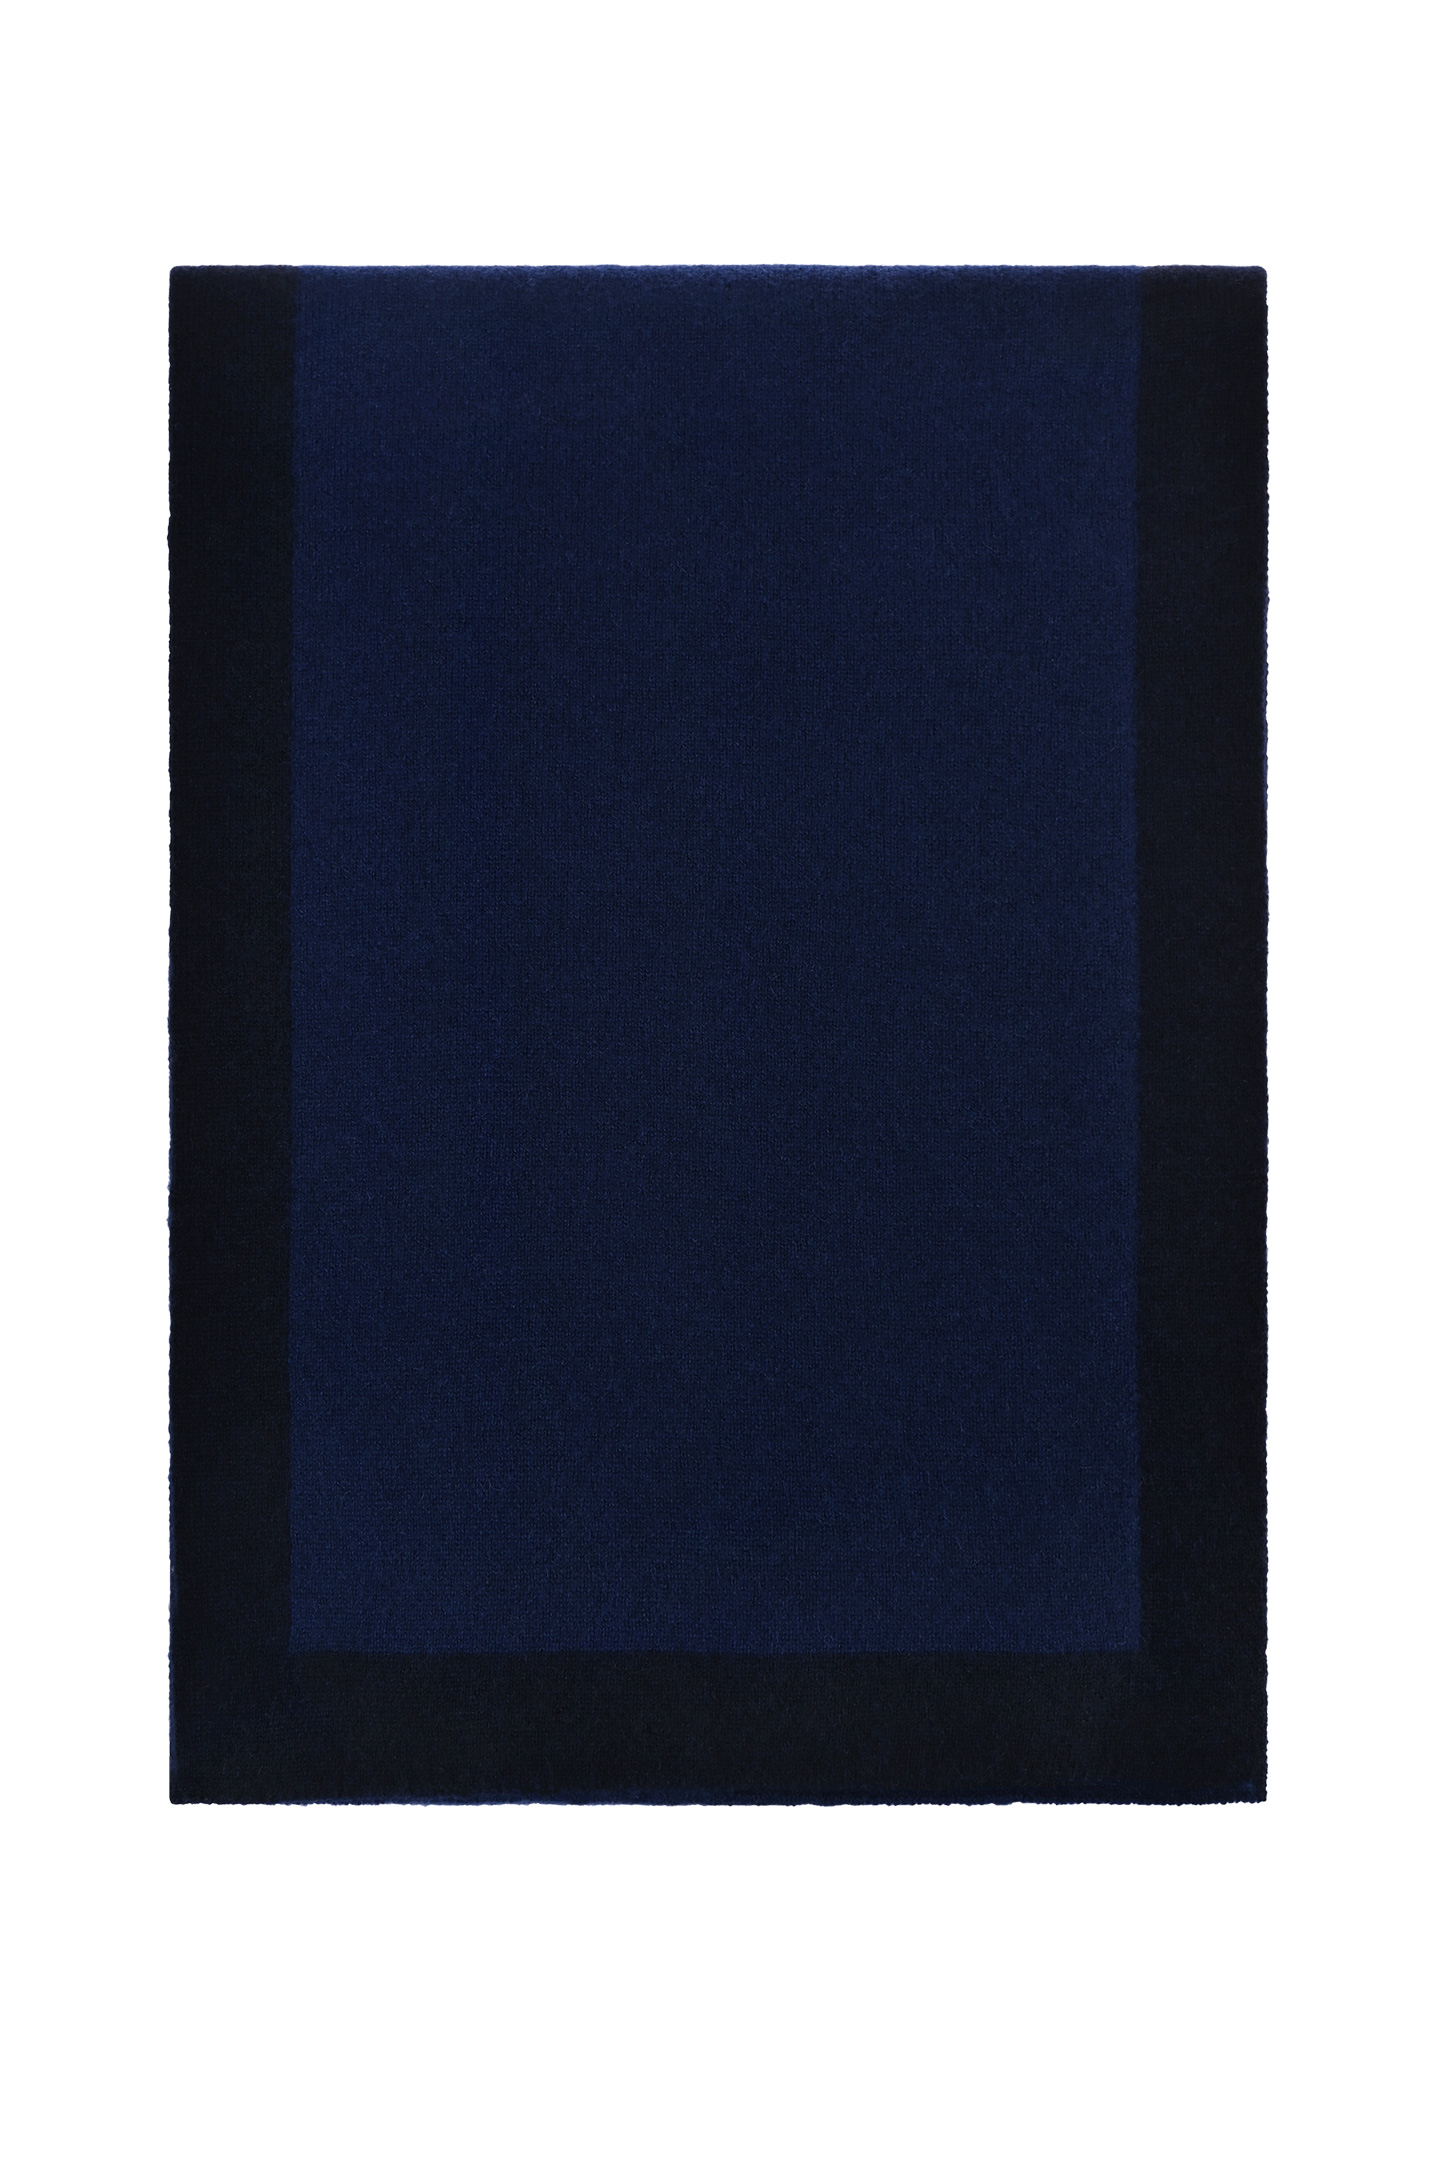 Шарф DORIANI CASHMERE 241, цвет: Темно-синий, Мужской